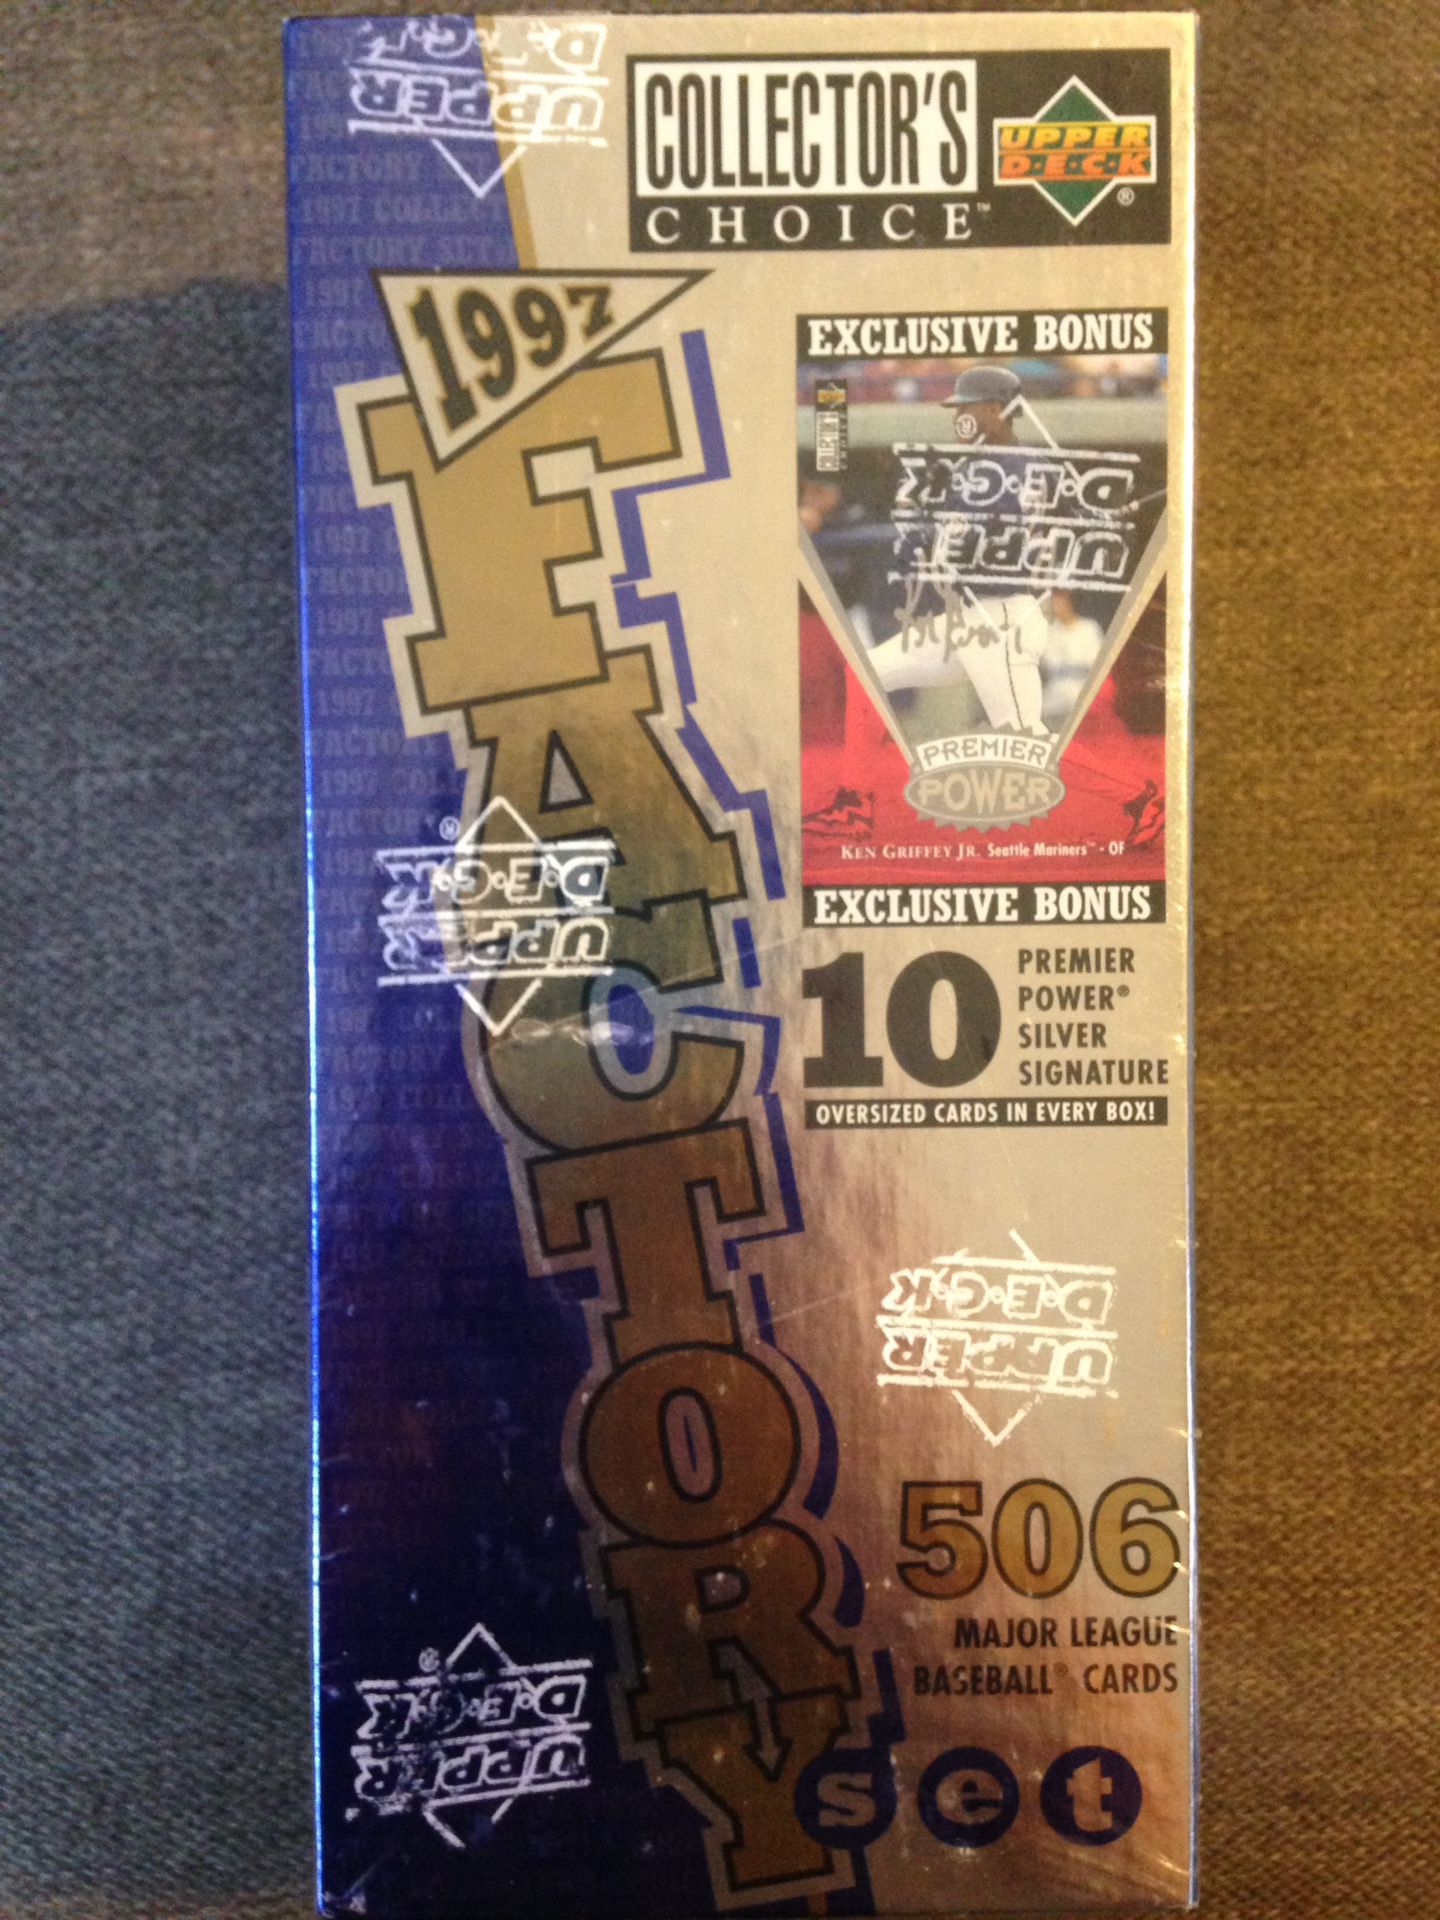 1997 Factory Set, Upper Deck Collector's Choice, Baseball cards